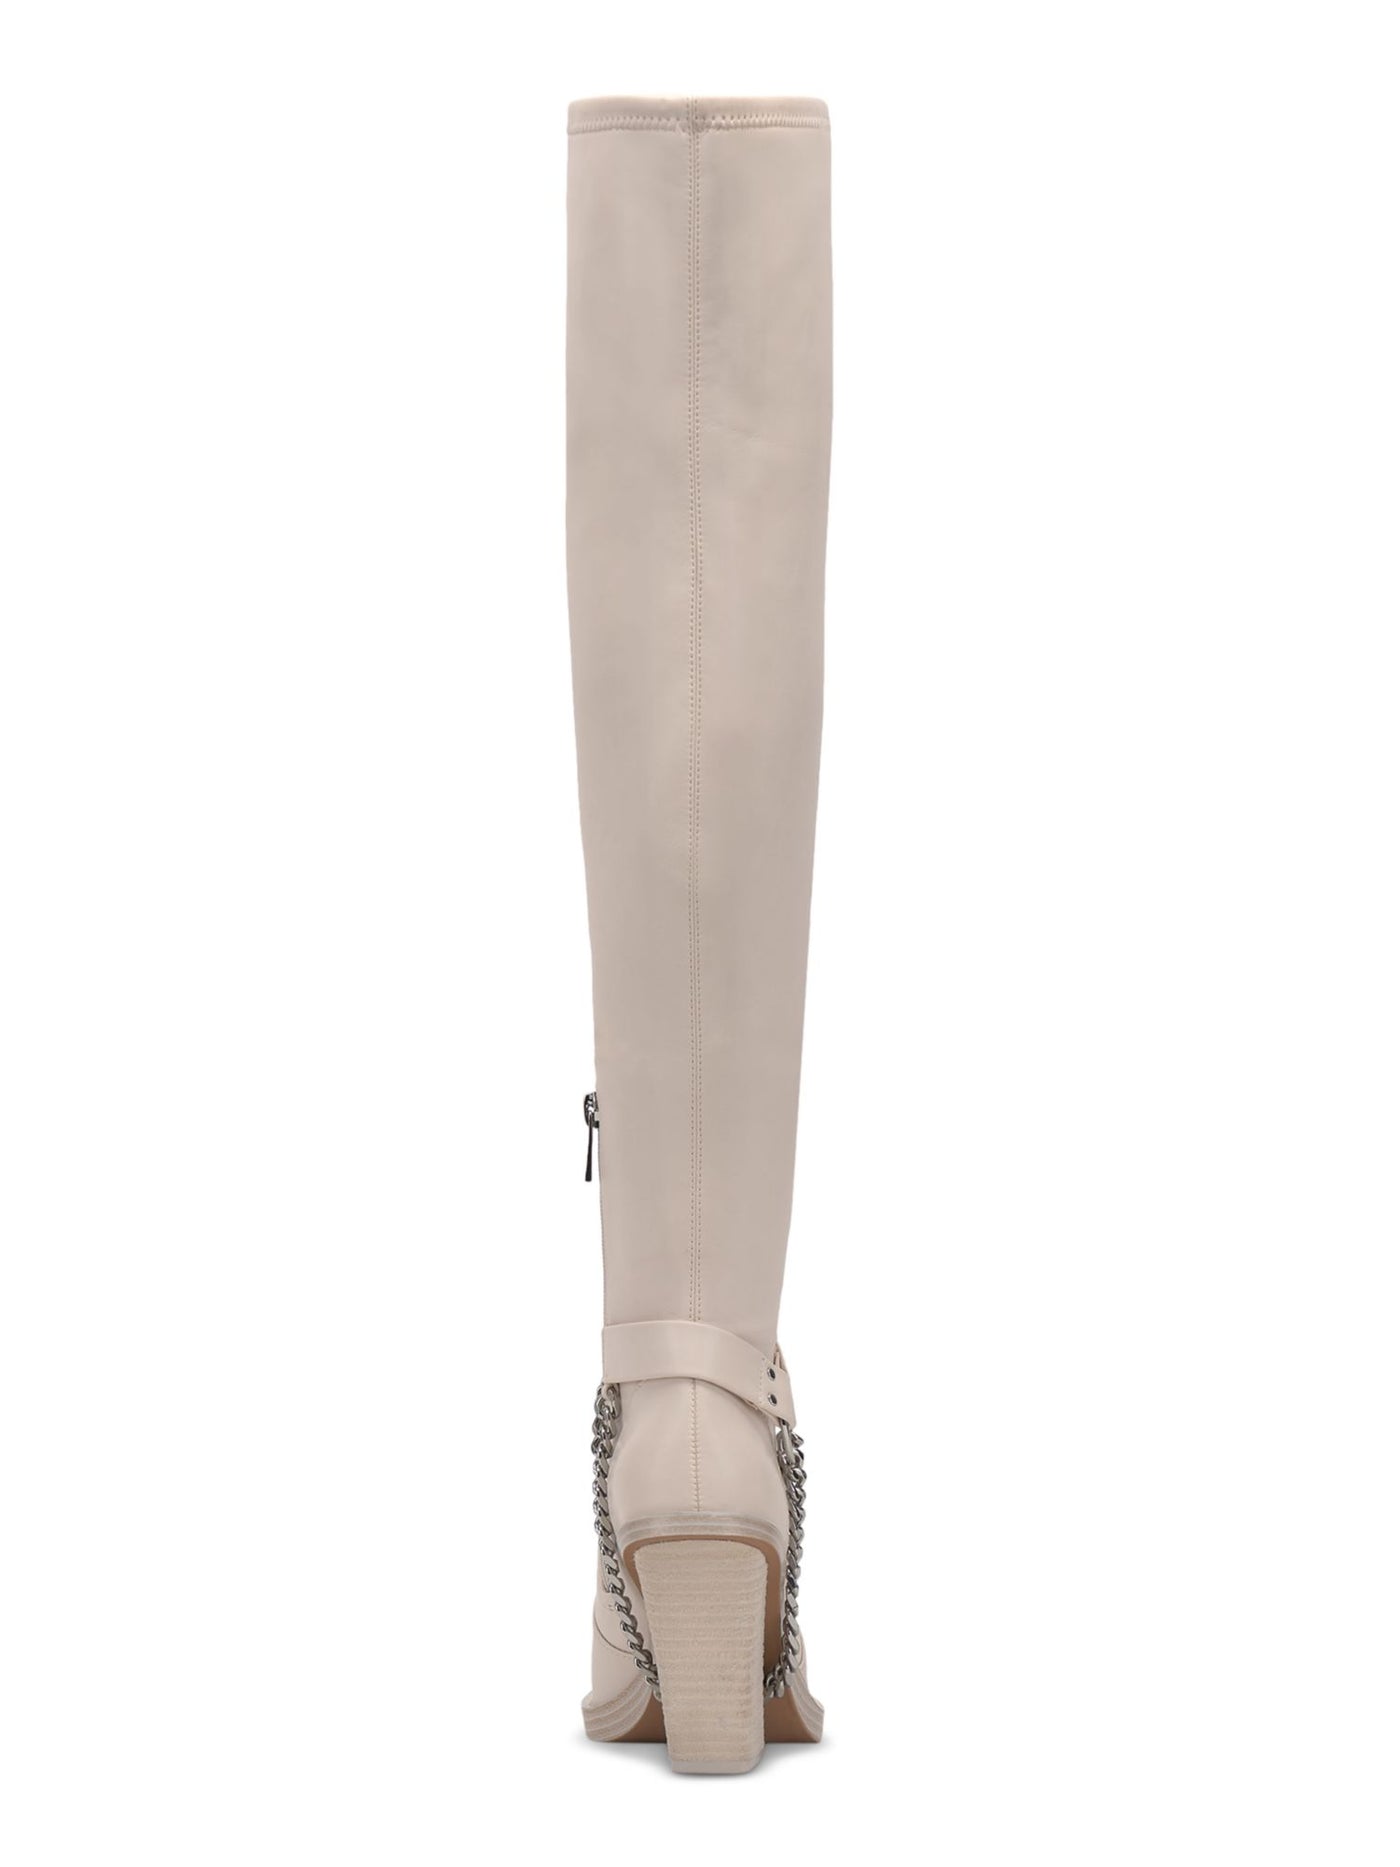 JESSICA SIMPSON Womens Beige Comfort Langer Pointed Toe Block Heel Dress Boots 7 M